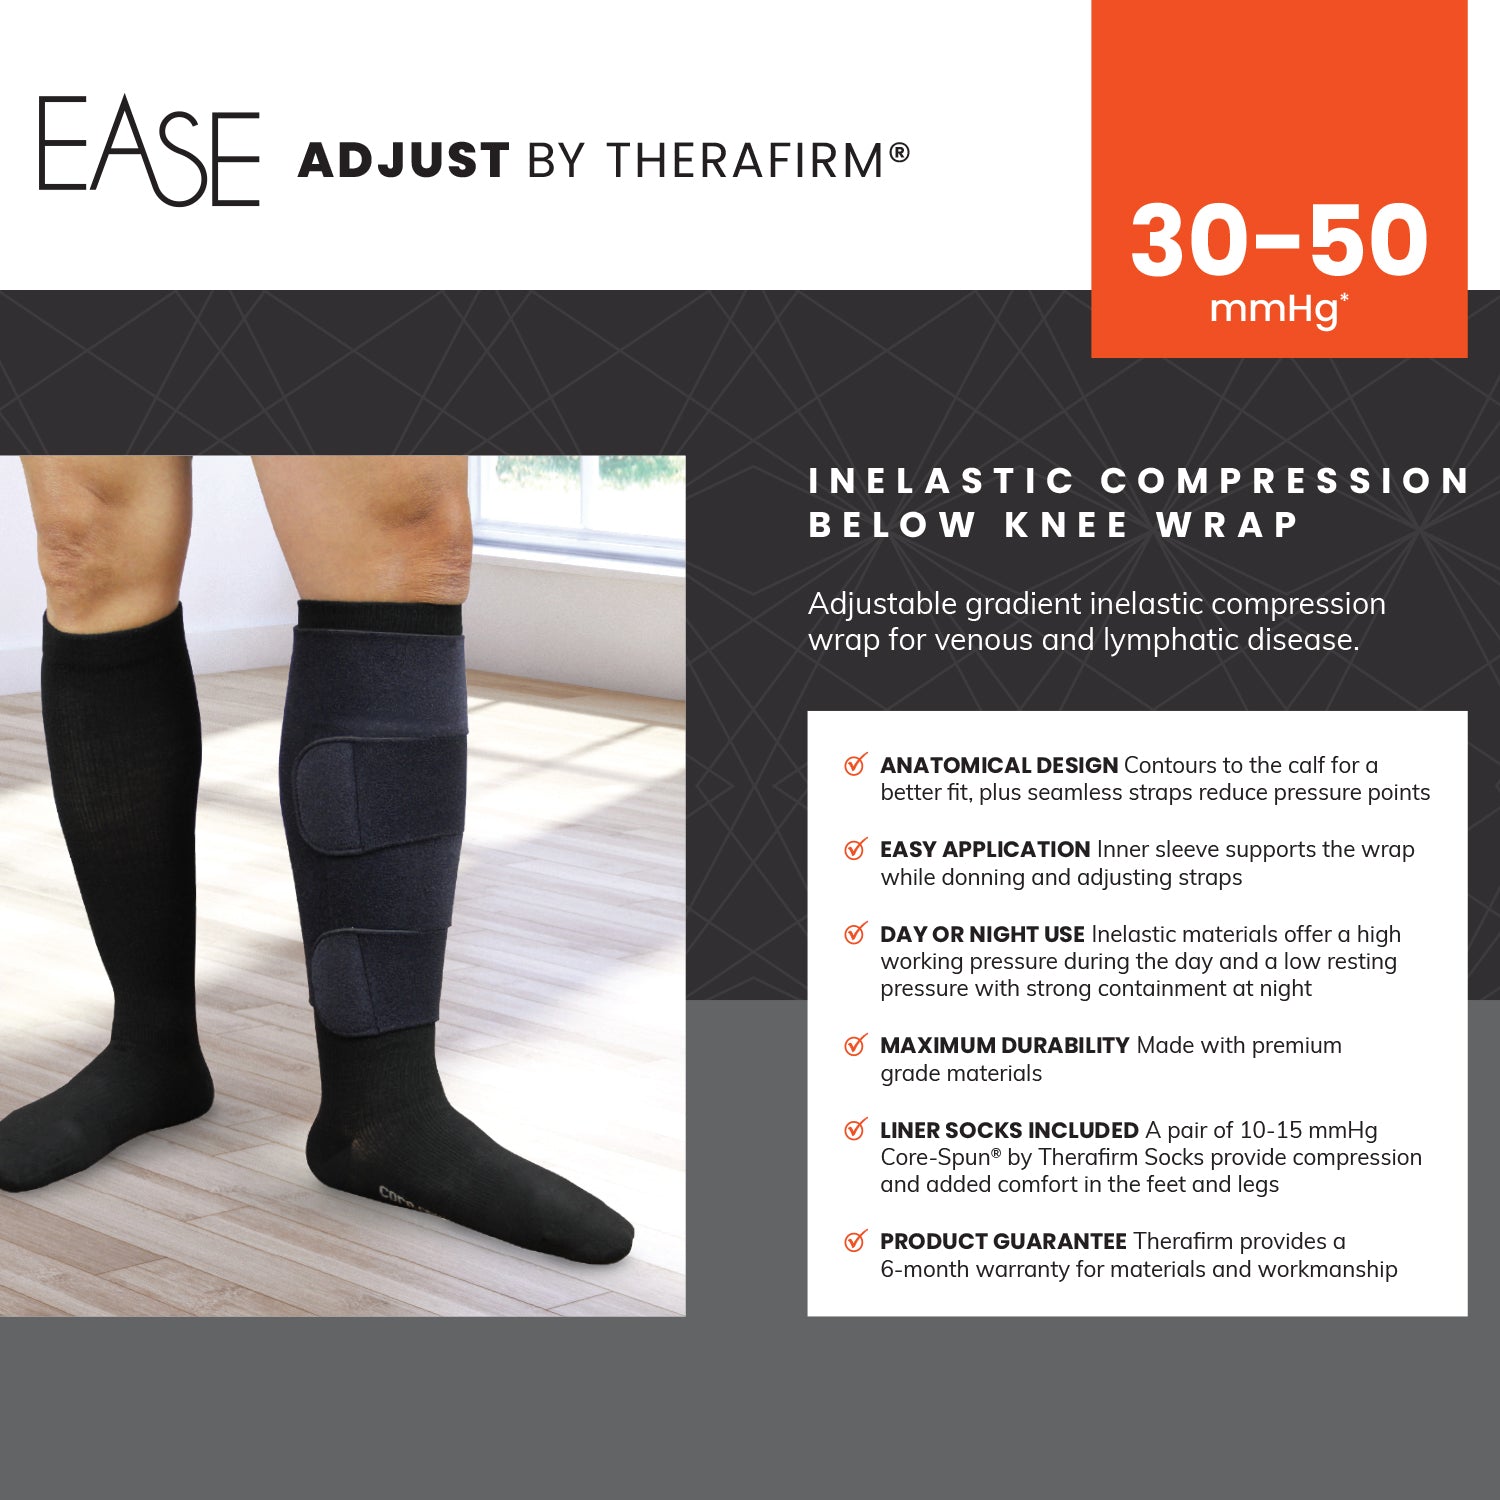 Therafirm Ease Adjust Inelastic Compression Below Knee Wrap – Ames